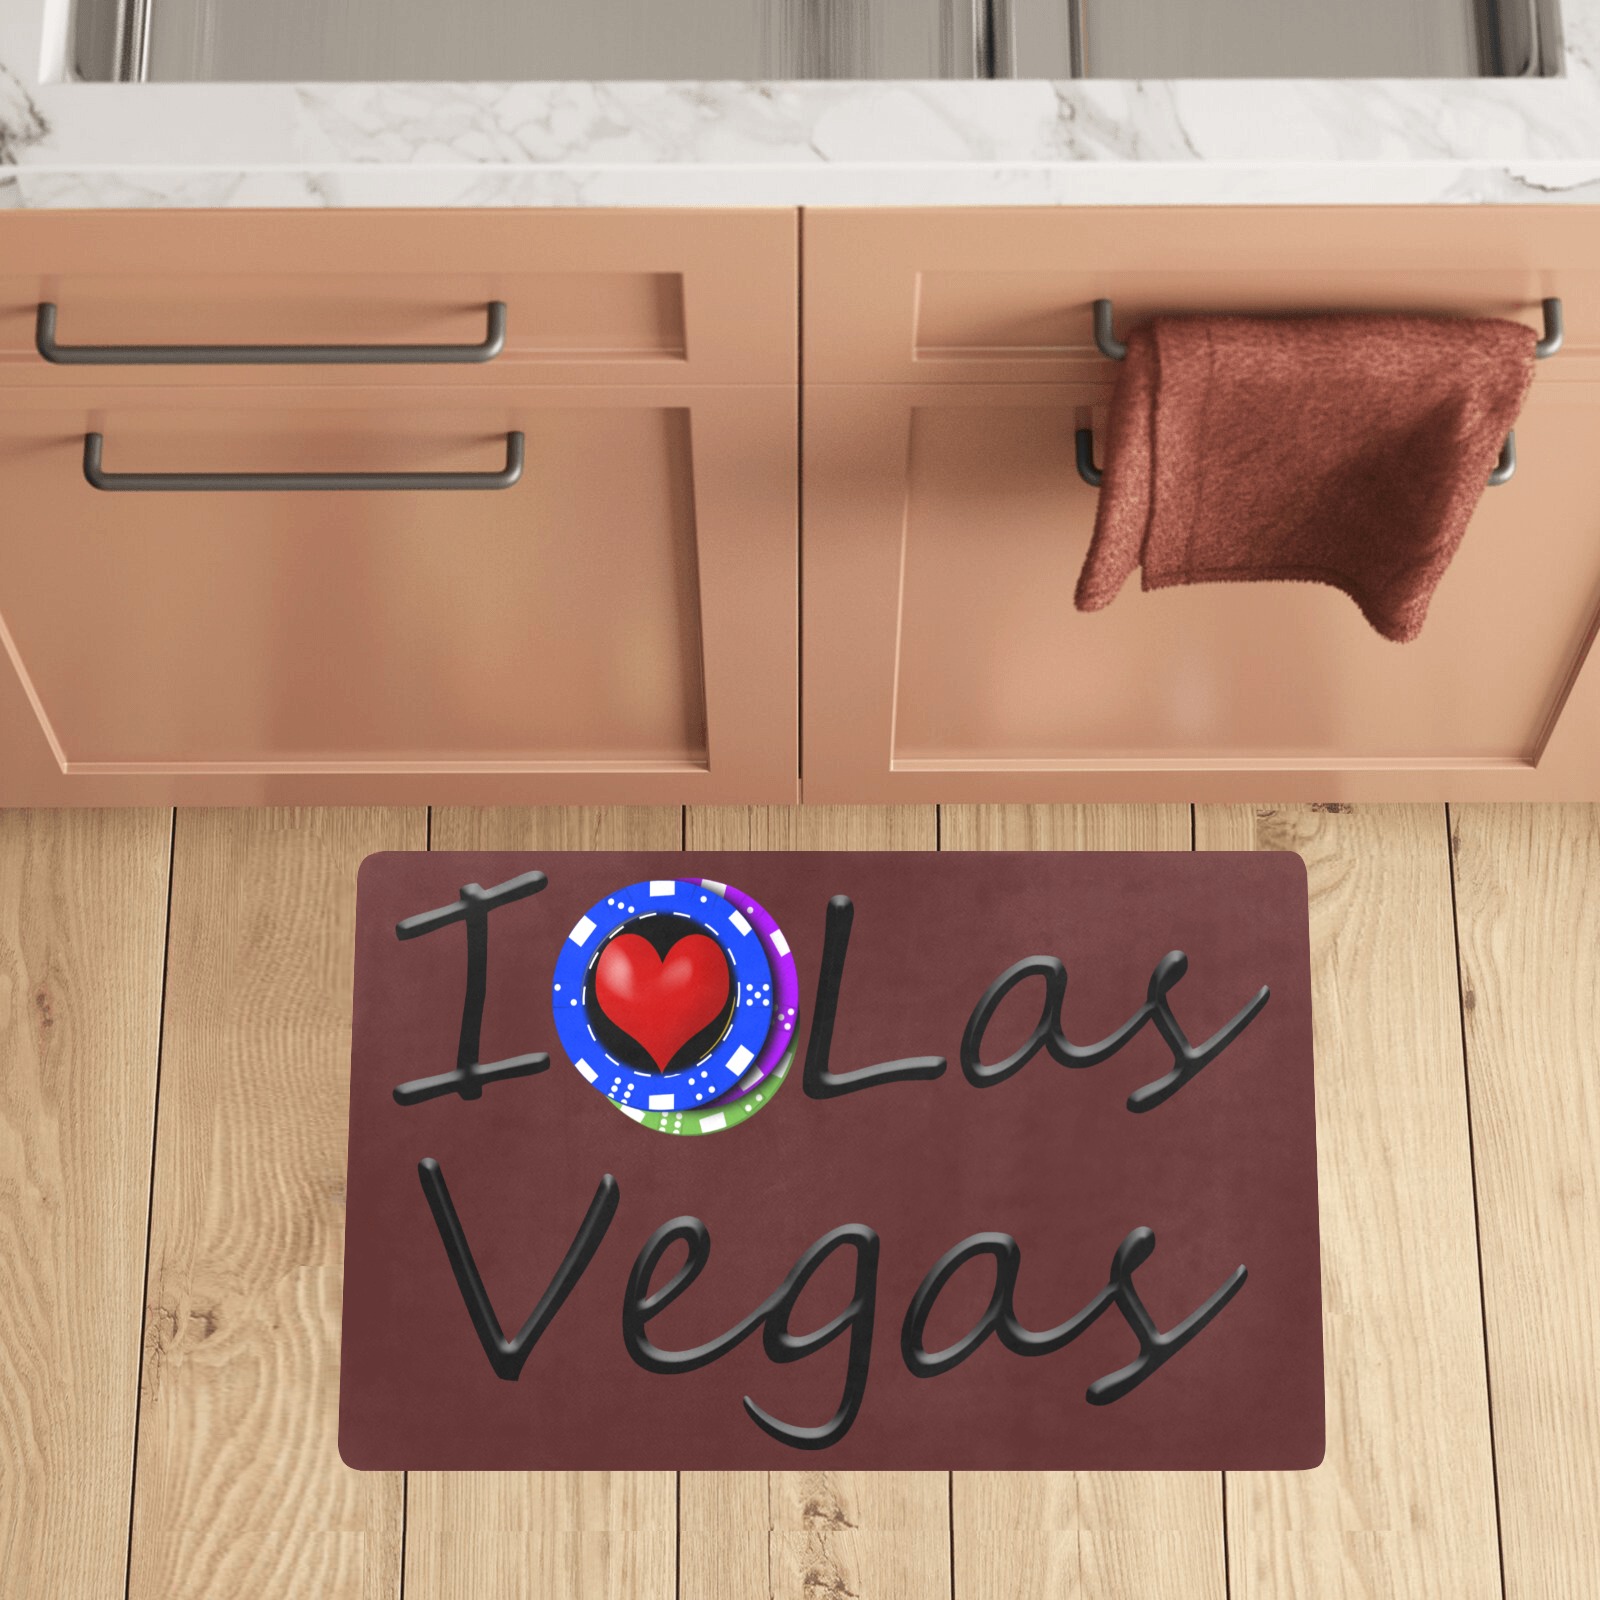 I Love Las Vegas / Brown Kitchen Mat 28"x17"